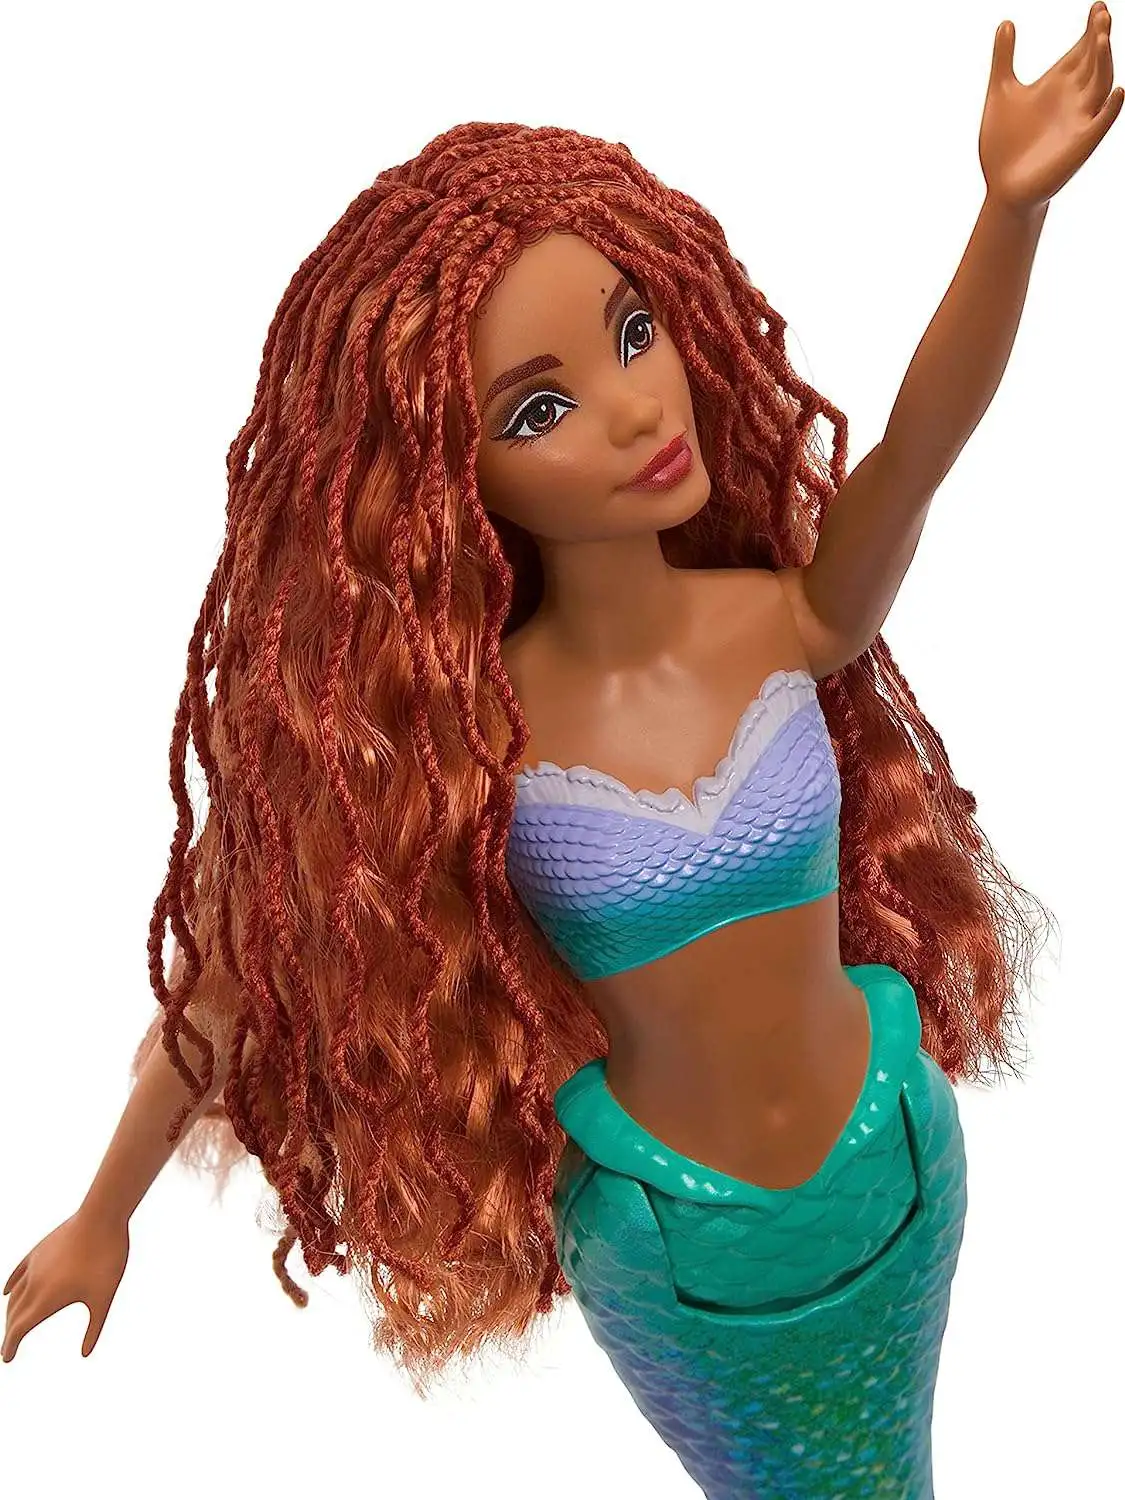 Disney The Little Mermaid Mermaid Ariel Doll Mattel - ToyWiz